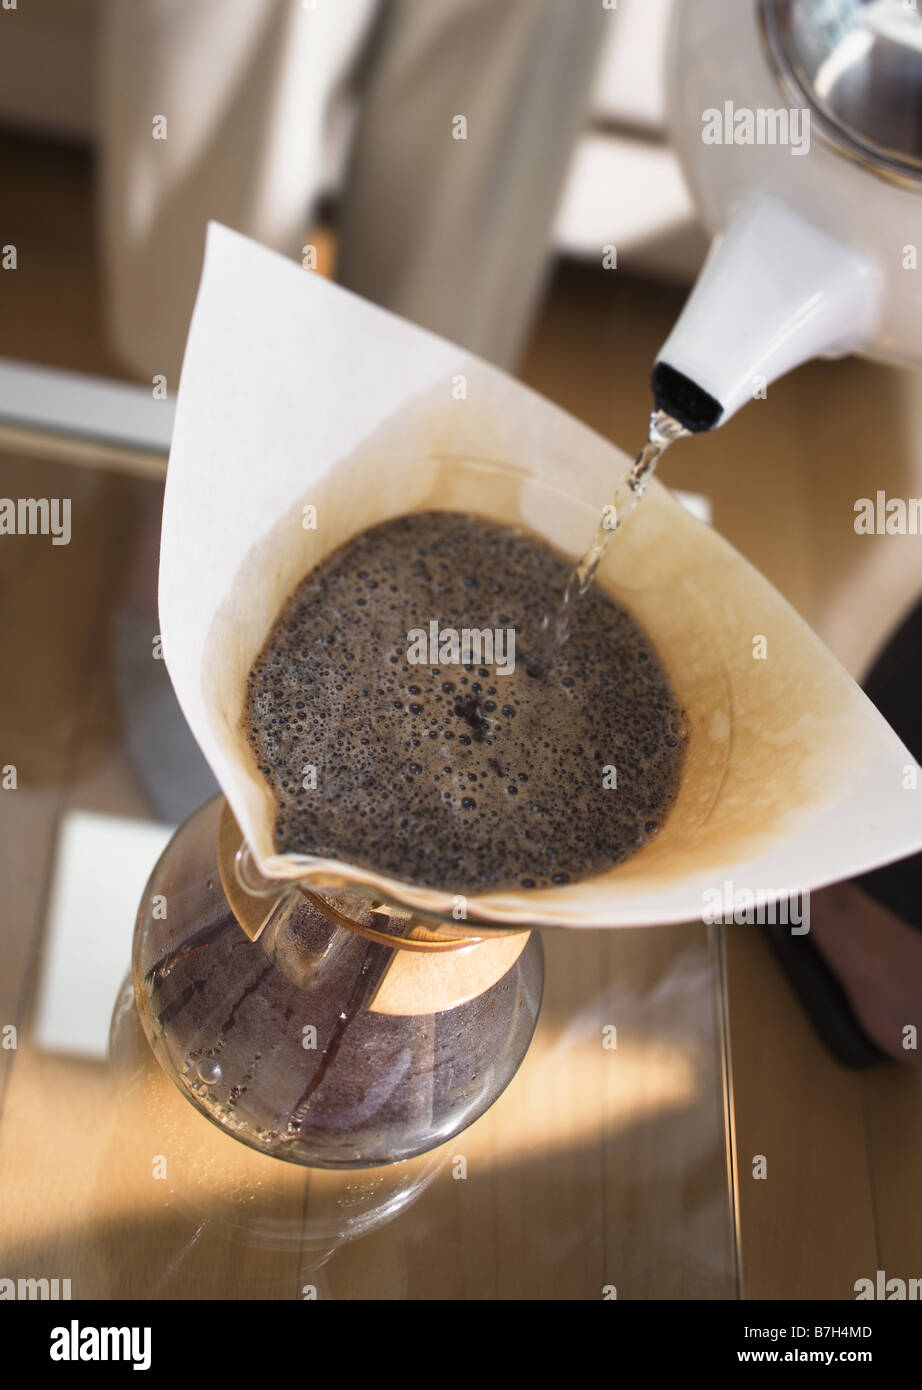 https://c8.alamy.com/comp/B7H4MD/coffee-maker-B7H4MD.jpg